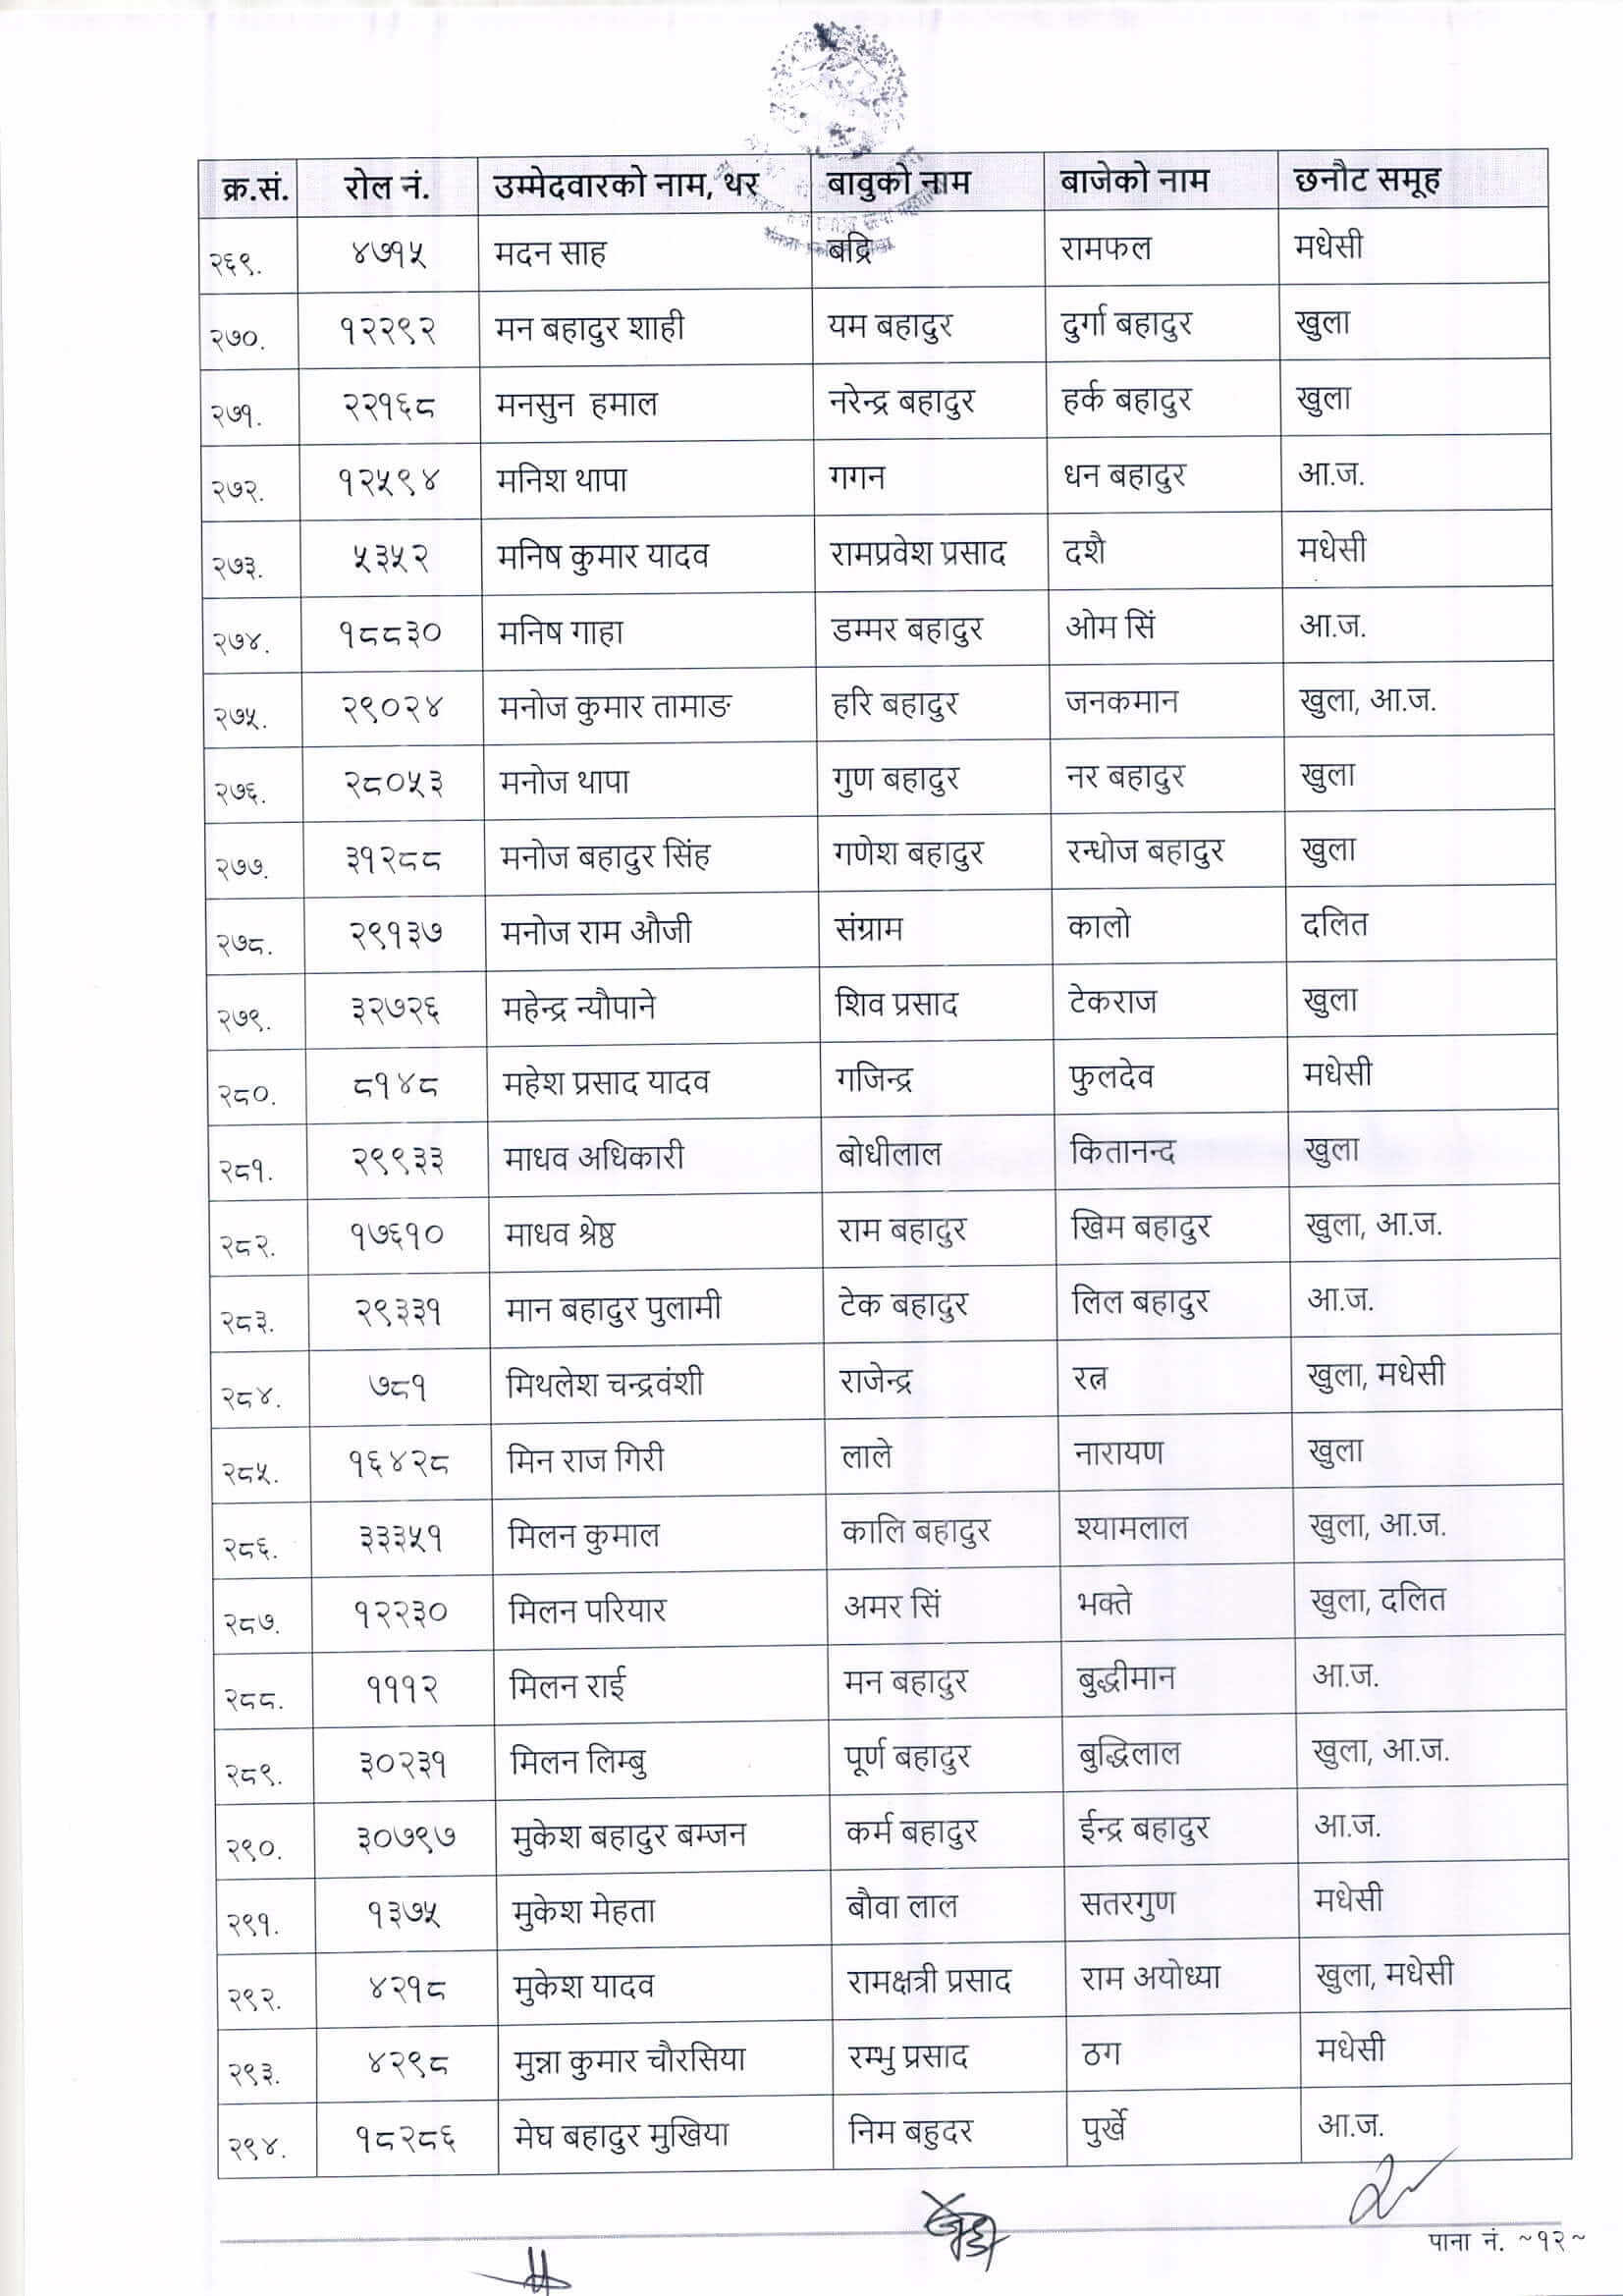 Nepal Police ASI (Janpad) Written Exam Result 2079